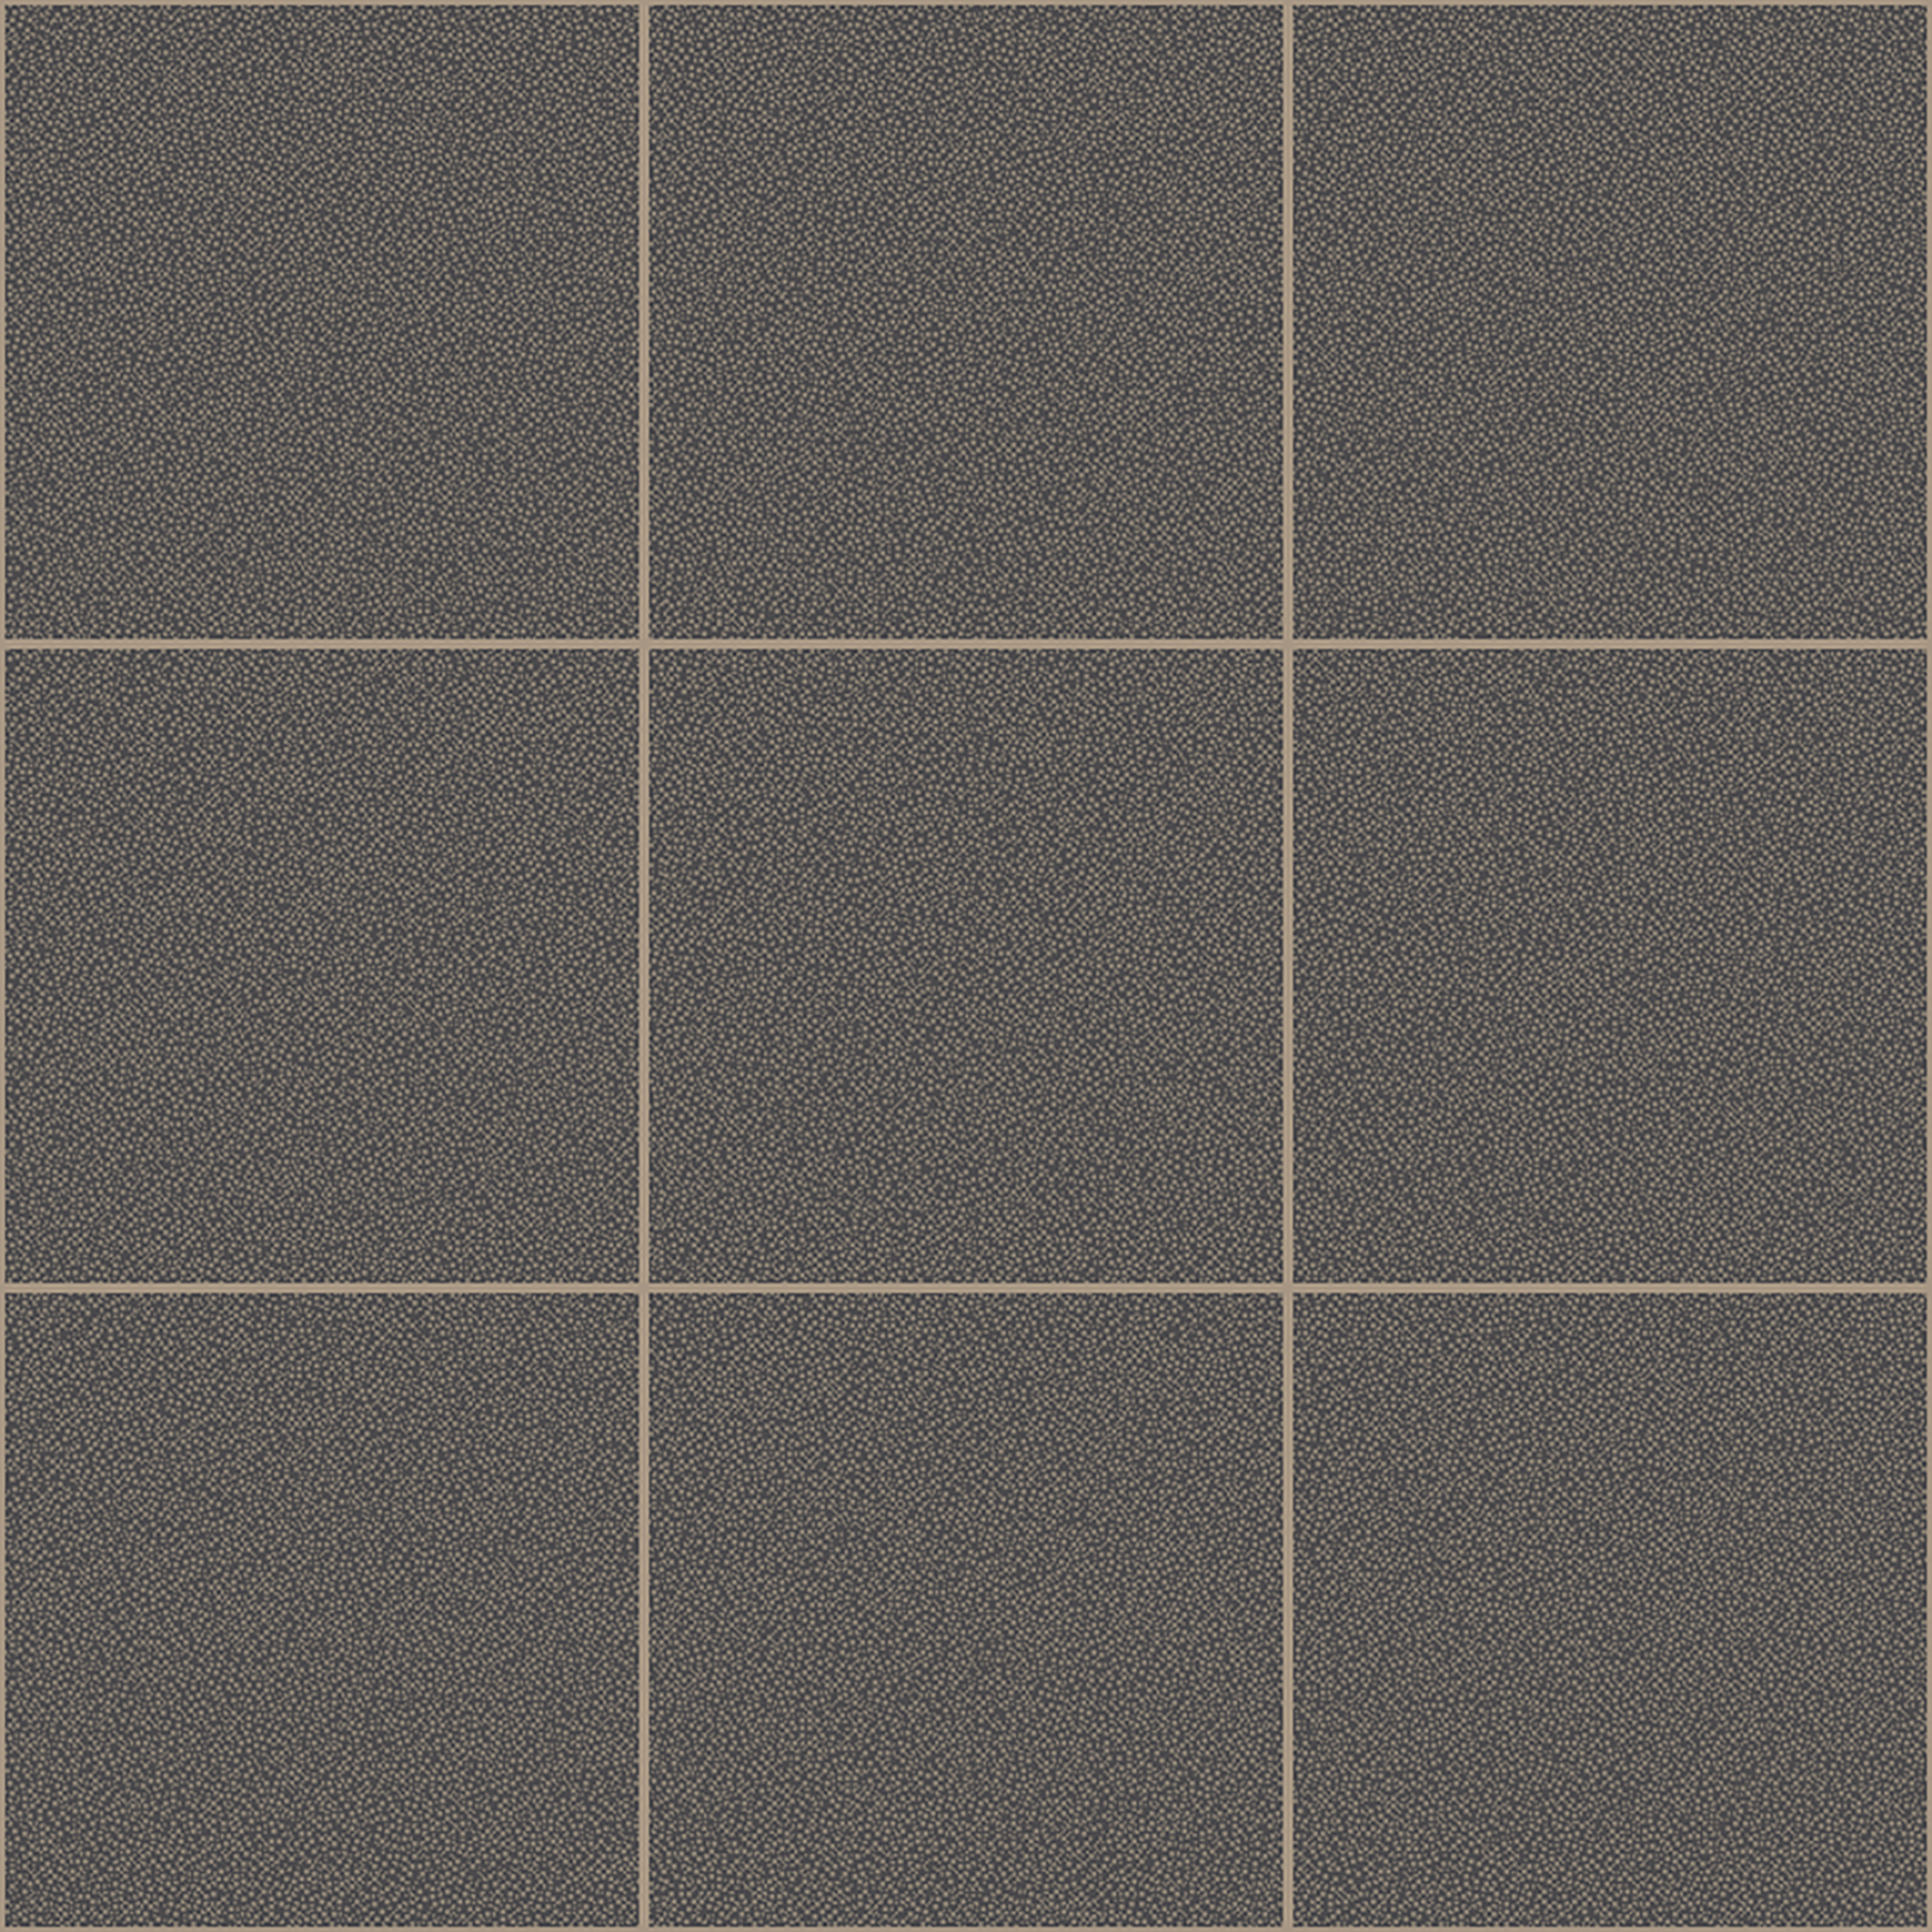 square tiles grey